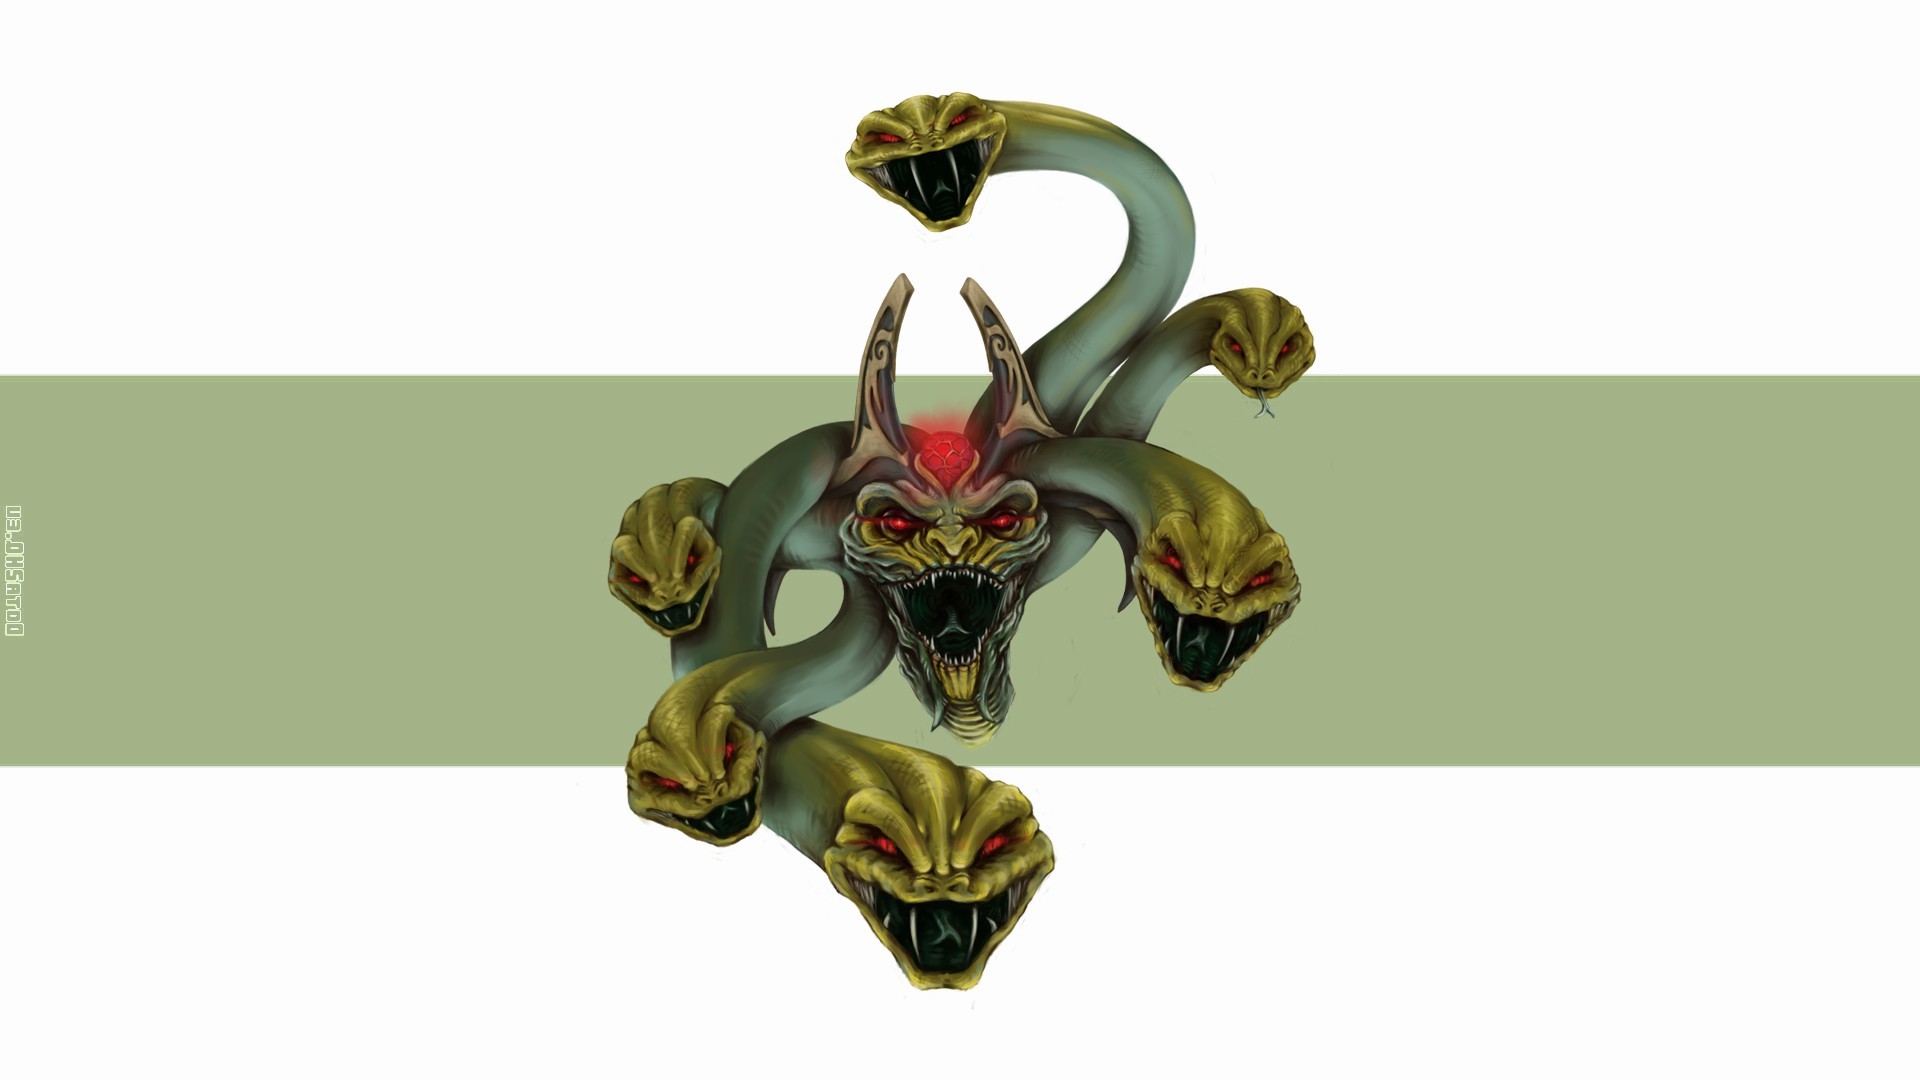 Dota, Dota 2, Defense Of The Ancient, Valve, Valve Corporation, Medusa, Heroes Wallpaper